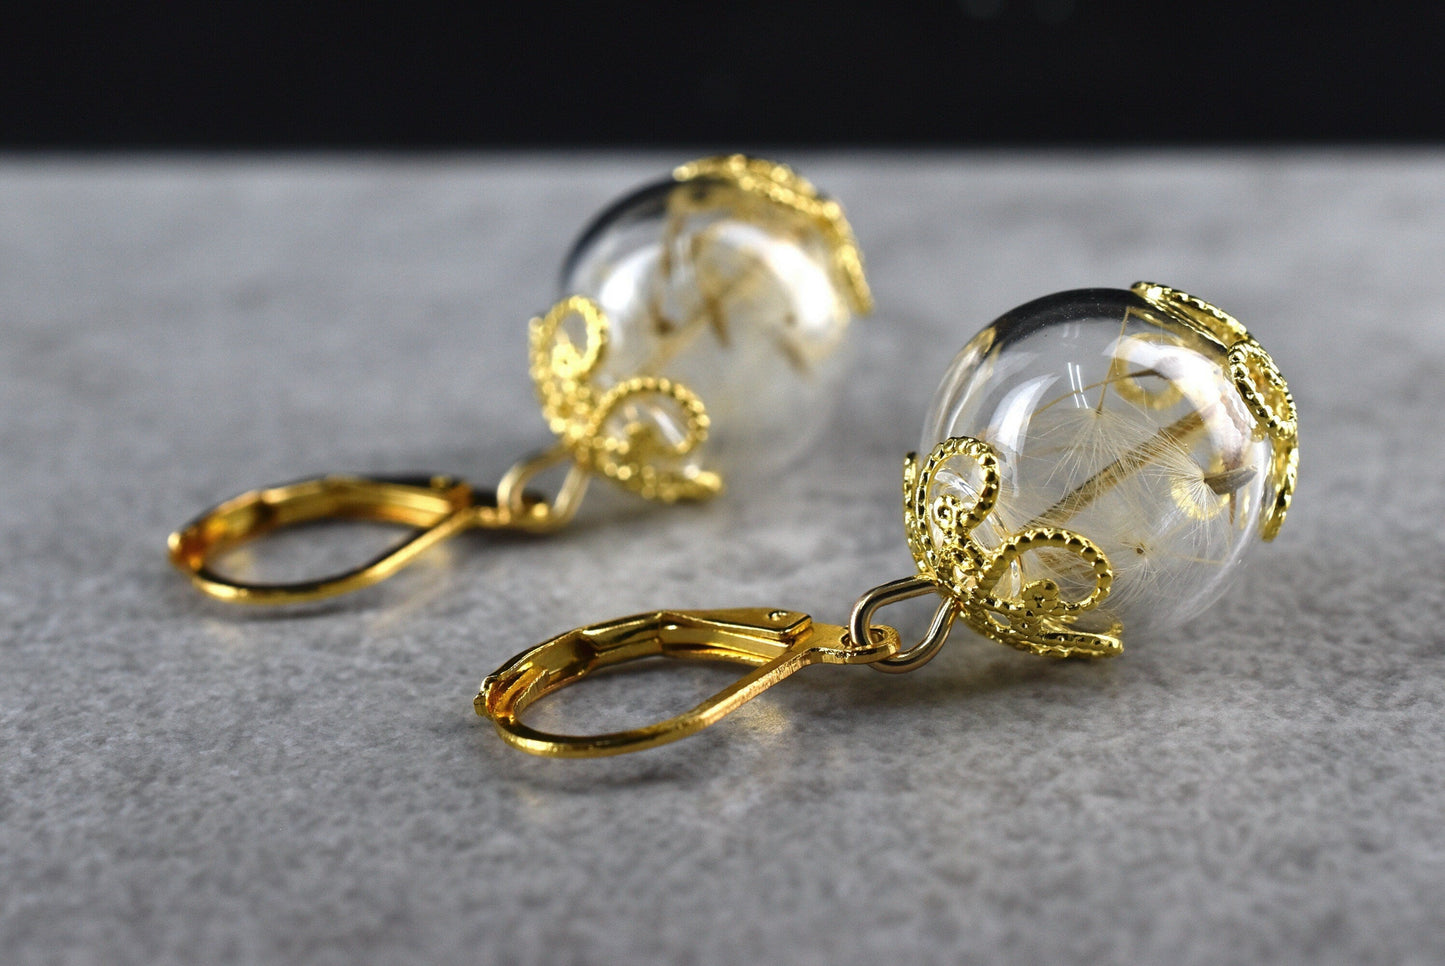 Real Pust Flowers Earrings - Golden Earrings with Dandelion Seeds - vinohr-71